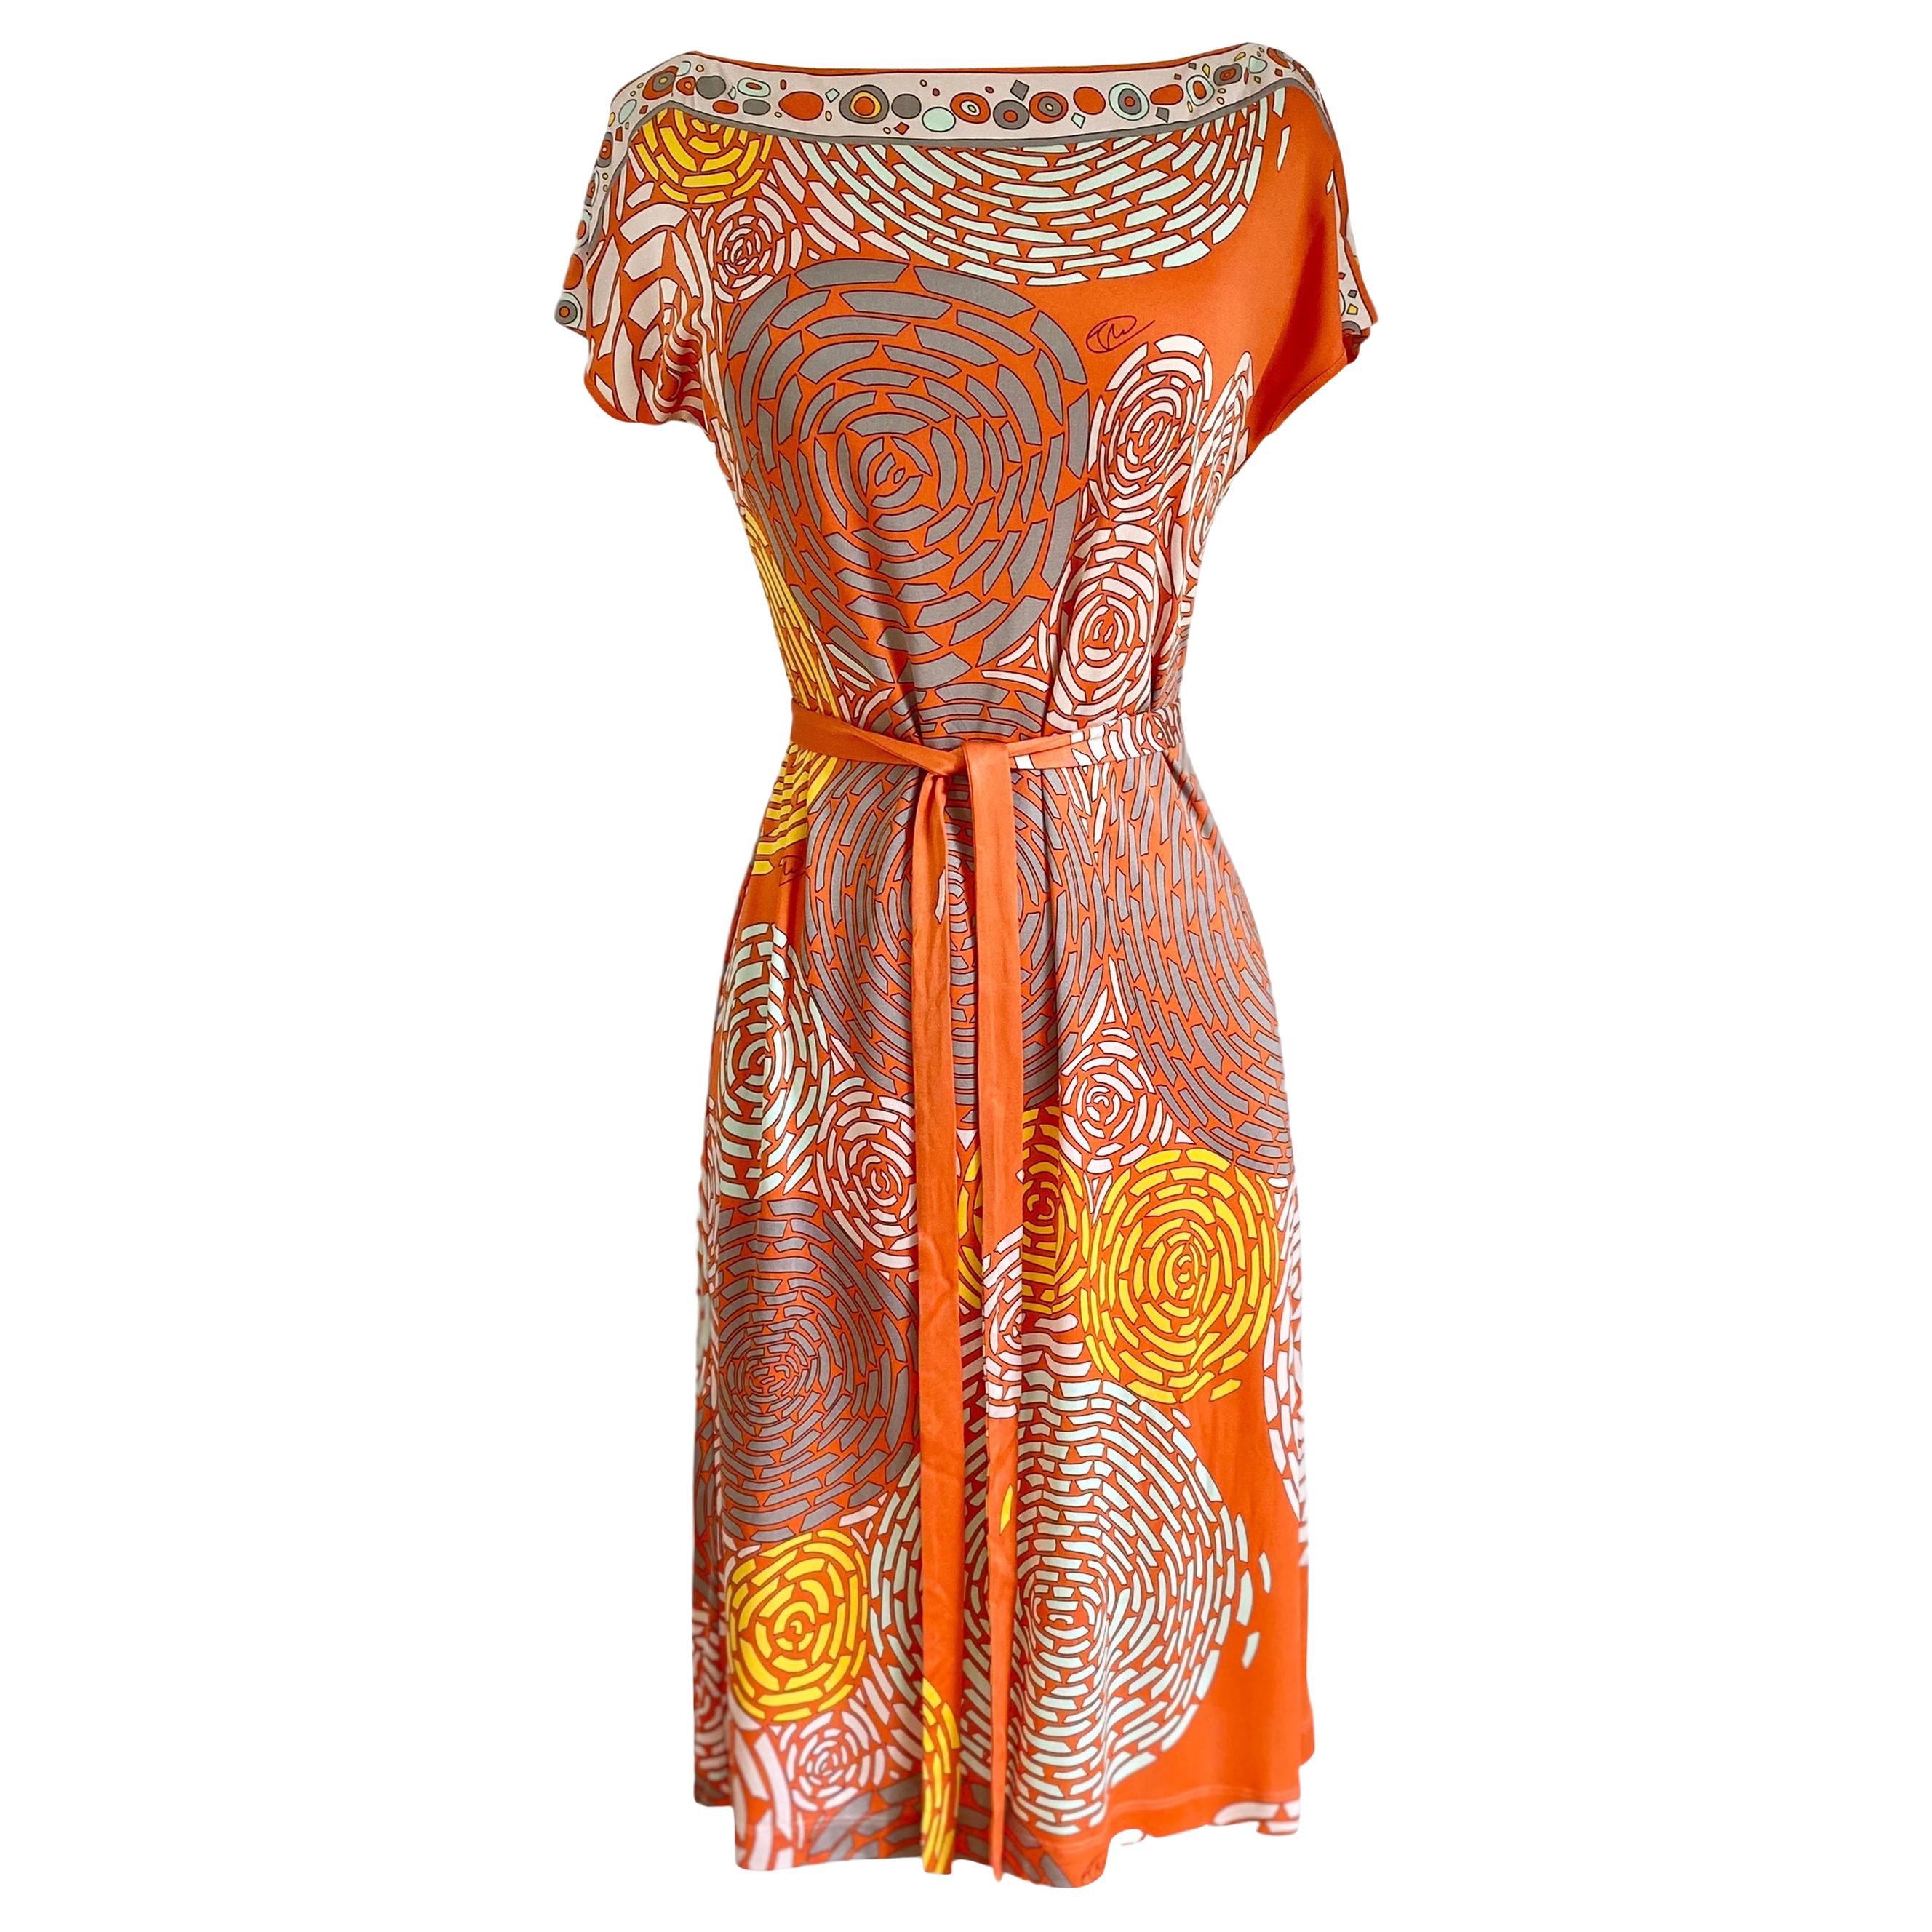 Coral Orange FLORA KUNG Twin Print Floral silk jersey shift dress NWT